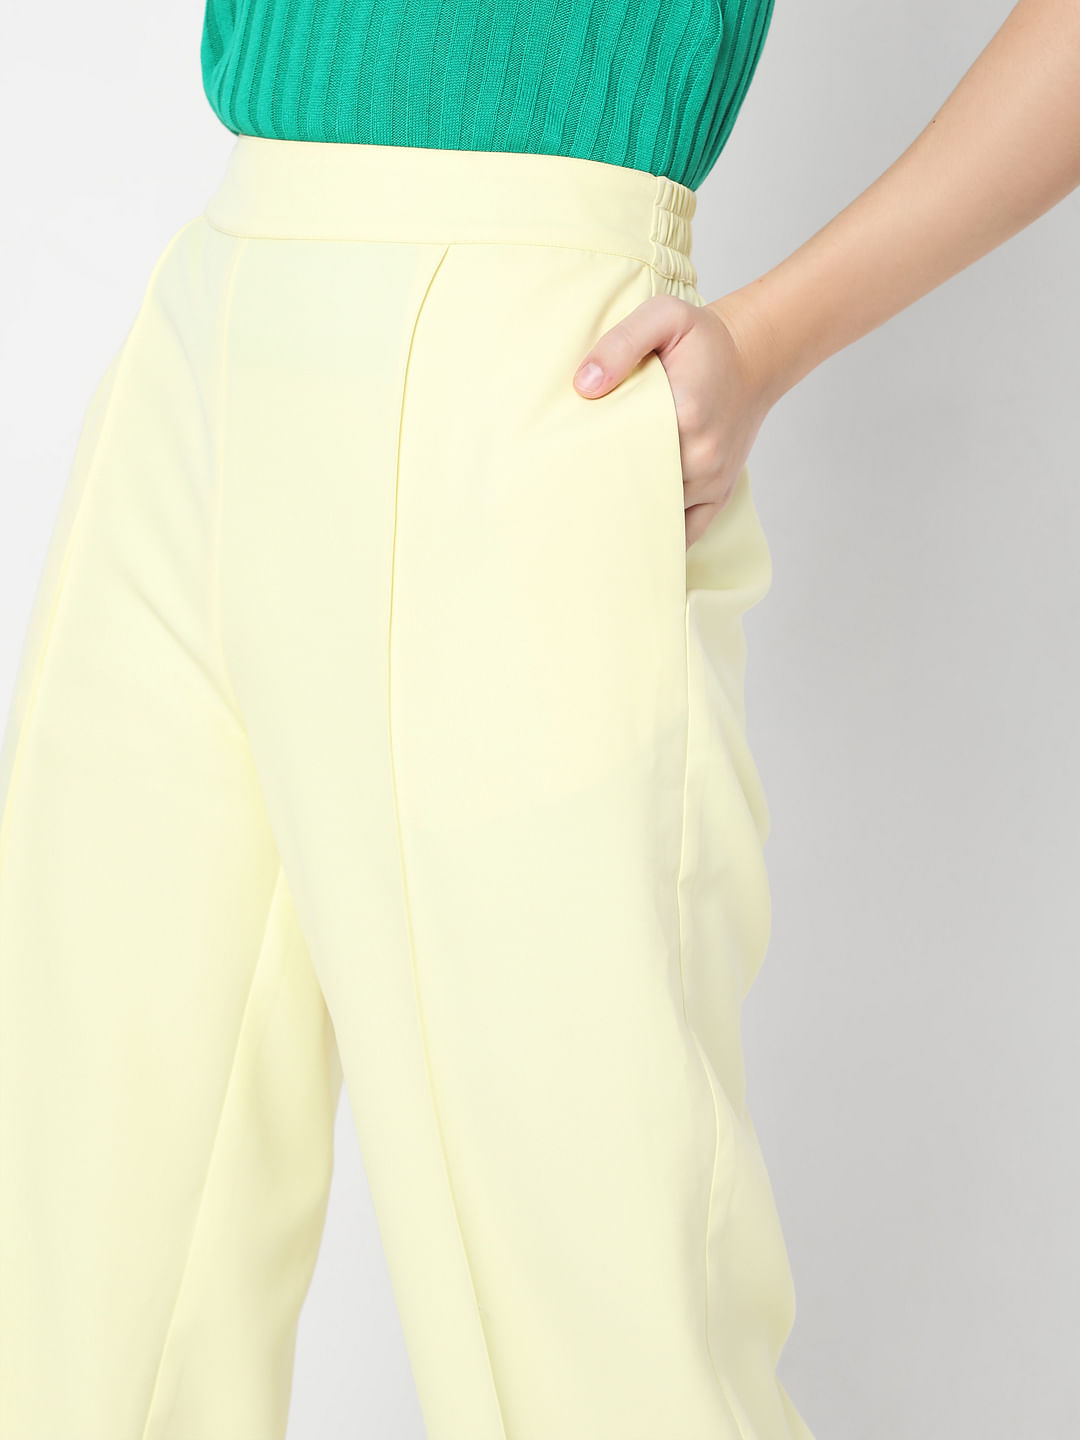 Womens Bright Yellow MidRise Cotton Denim Stretch Pants  Go Colors